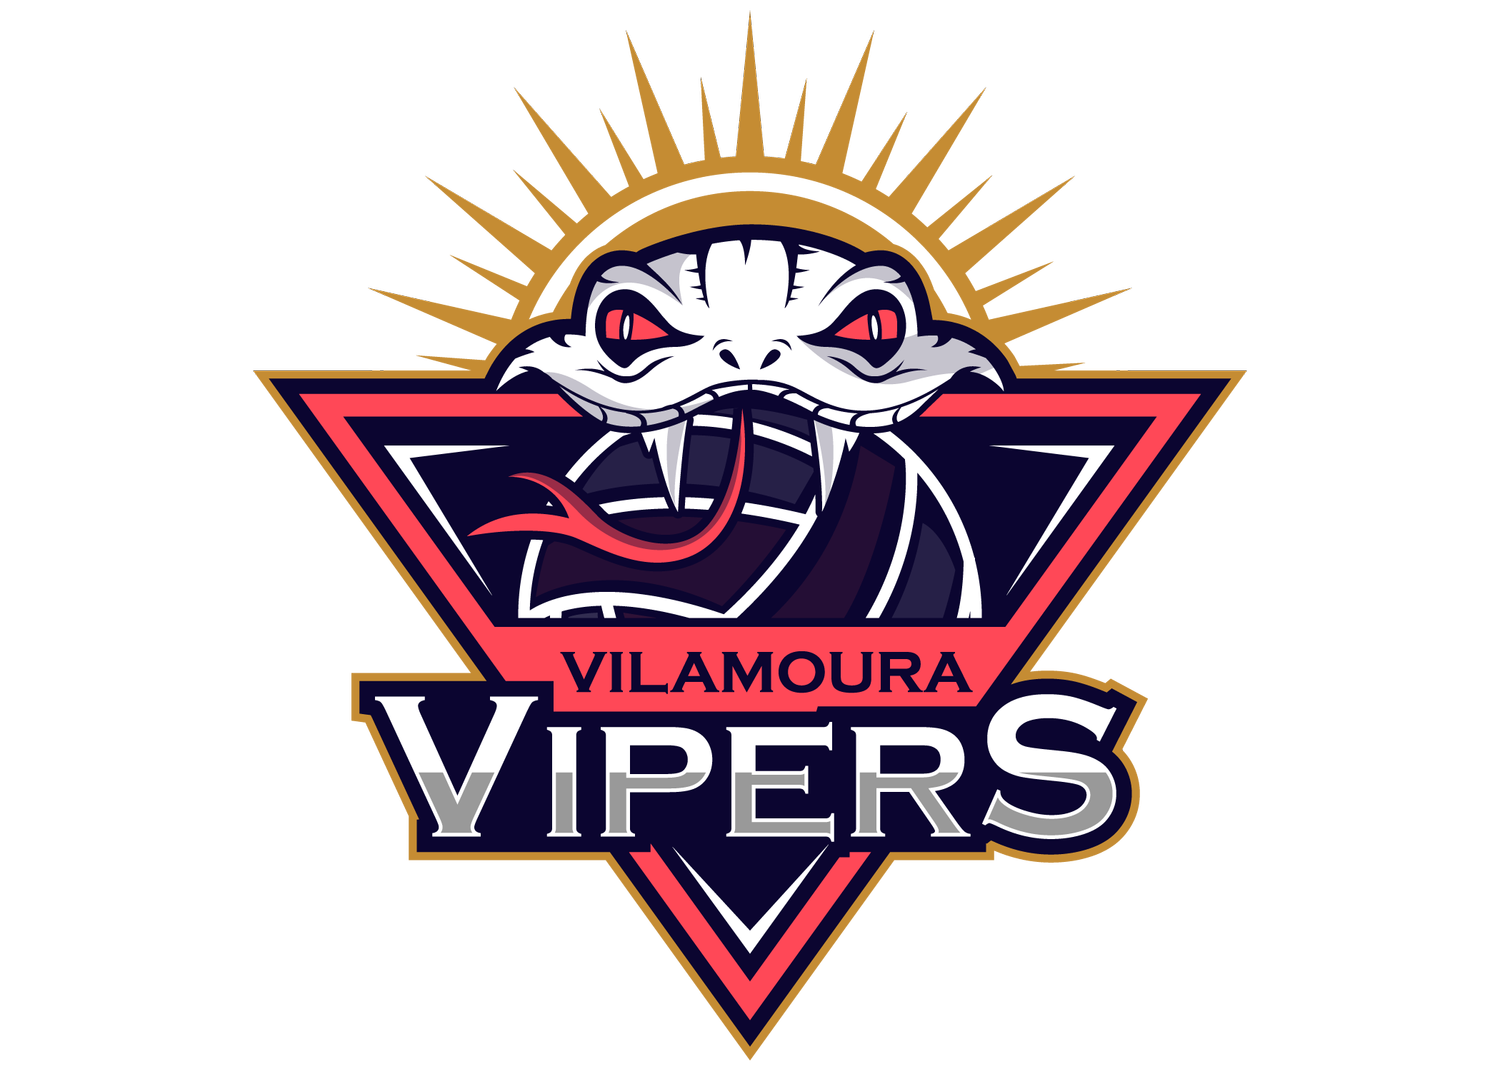 Vipers Netball Club